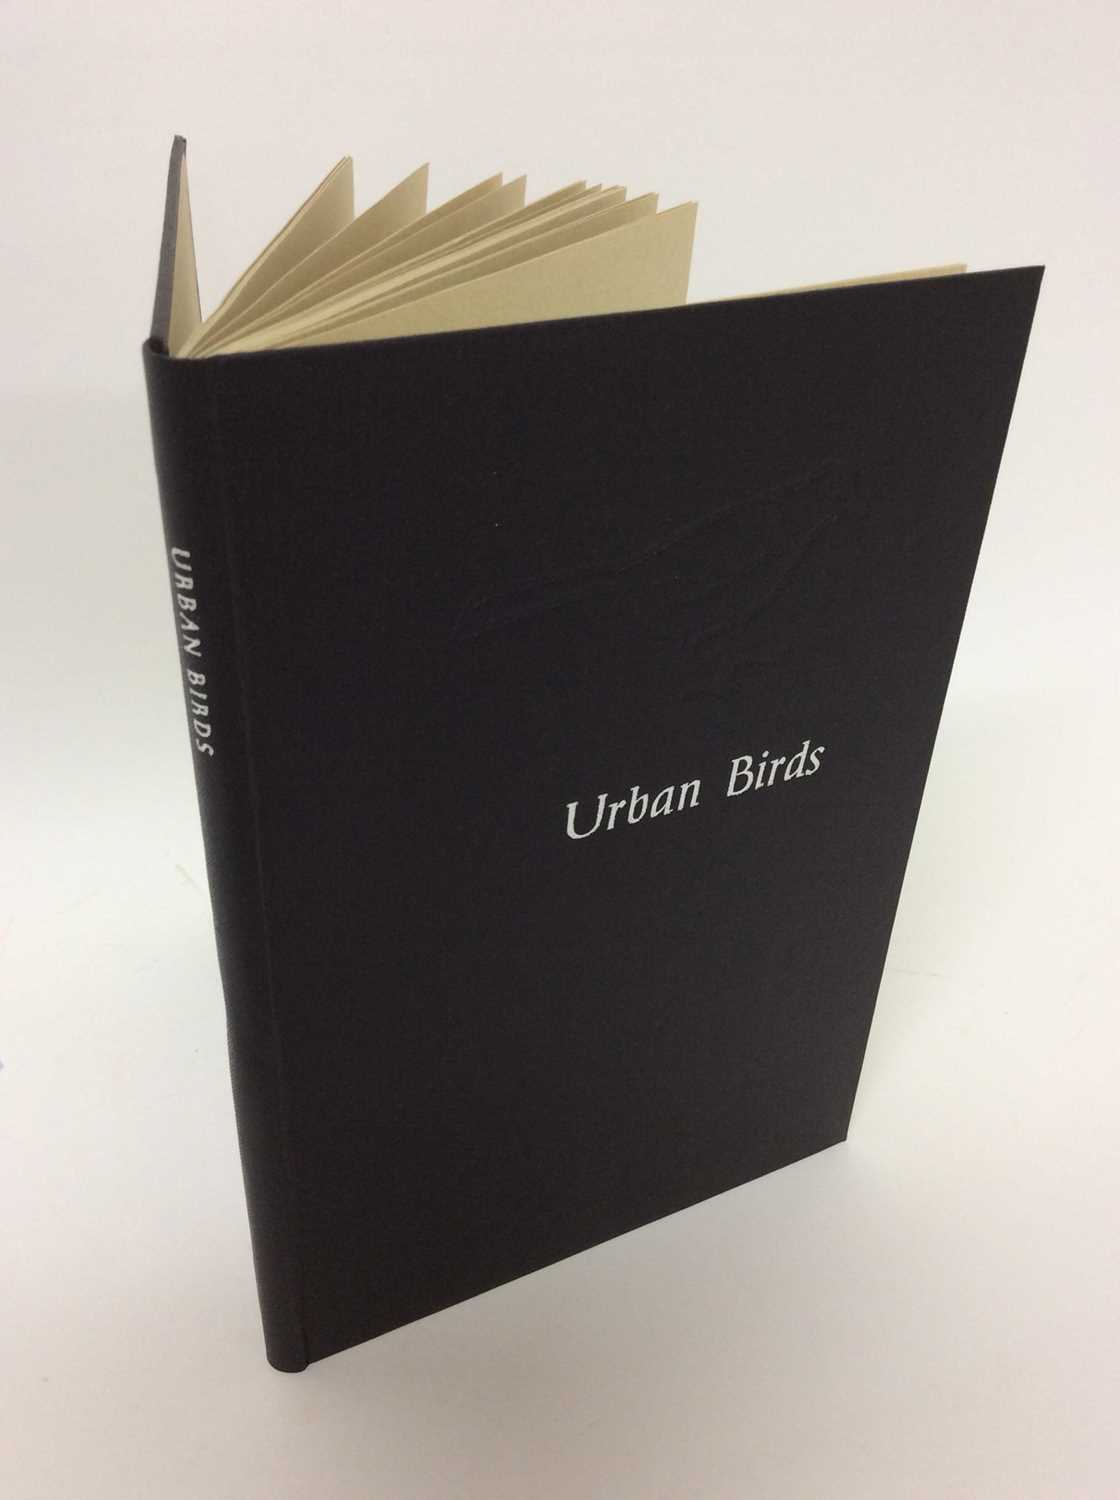 Jo Spaul - Urban Birds, Incline Press, three further private press books - Image 2 of 21